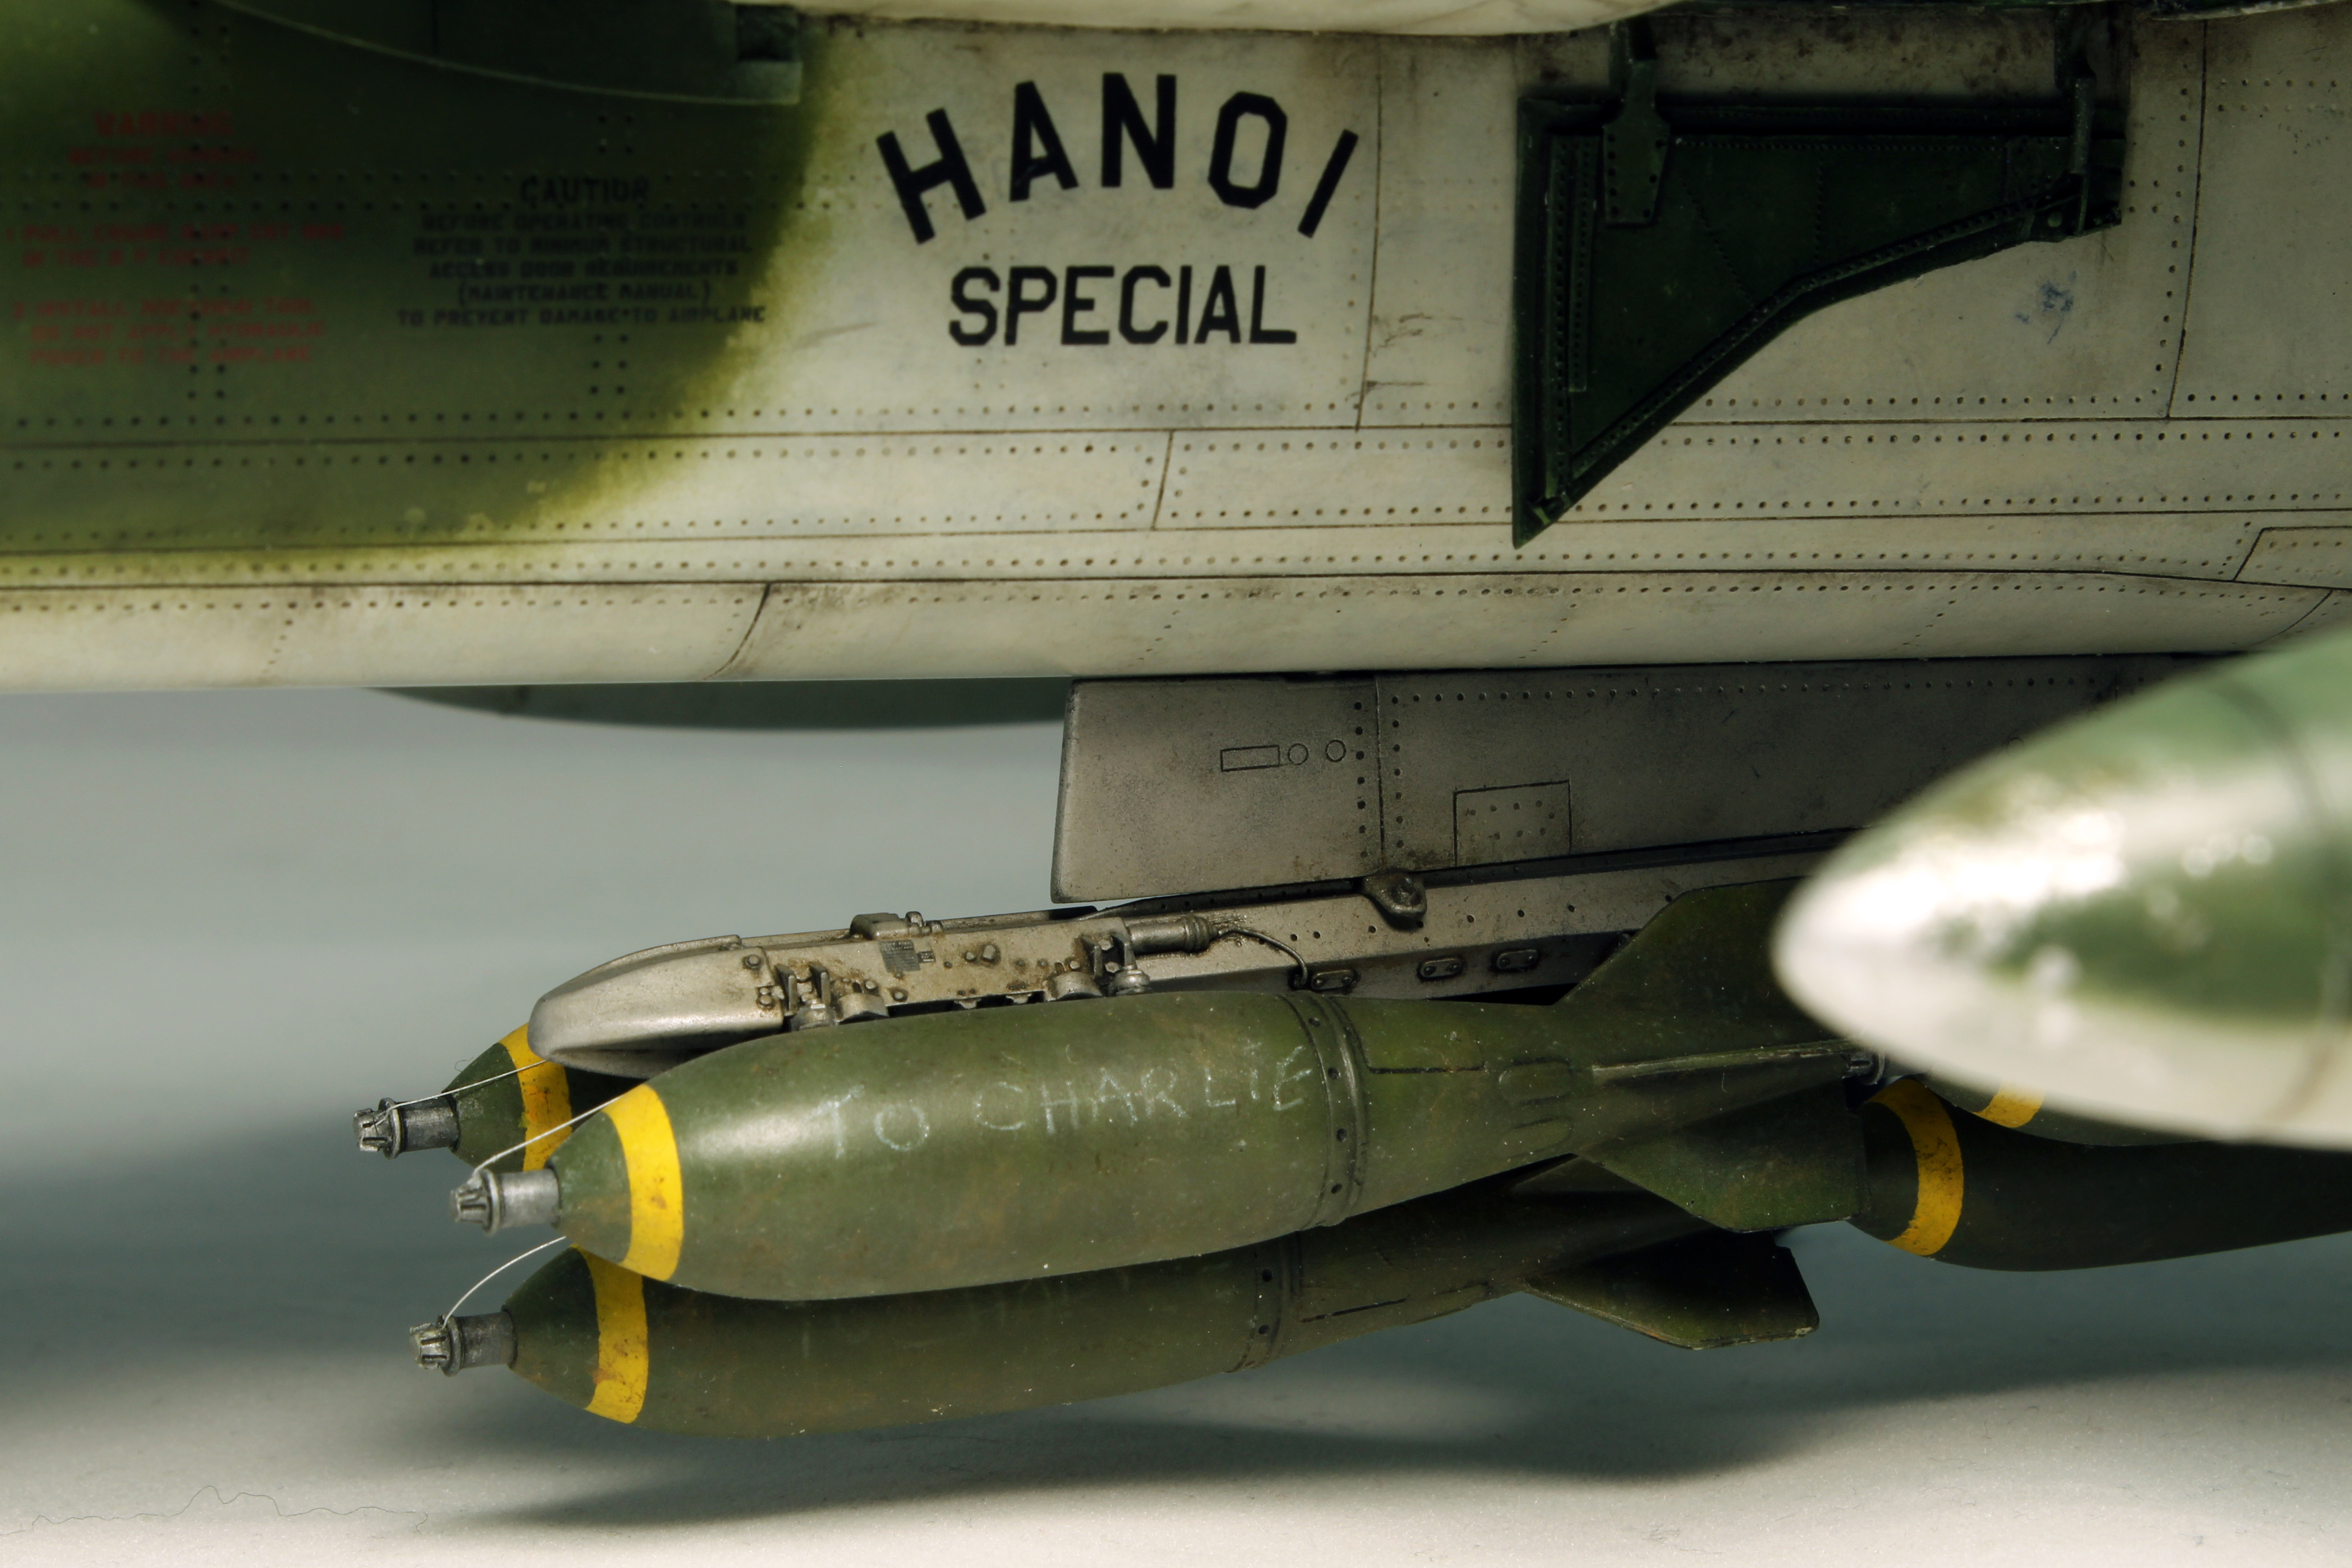 1/32 F-105D "Hanoi Special"